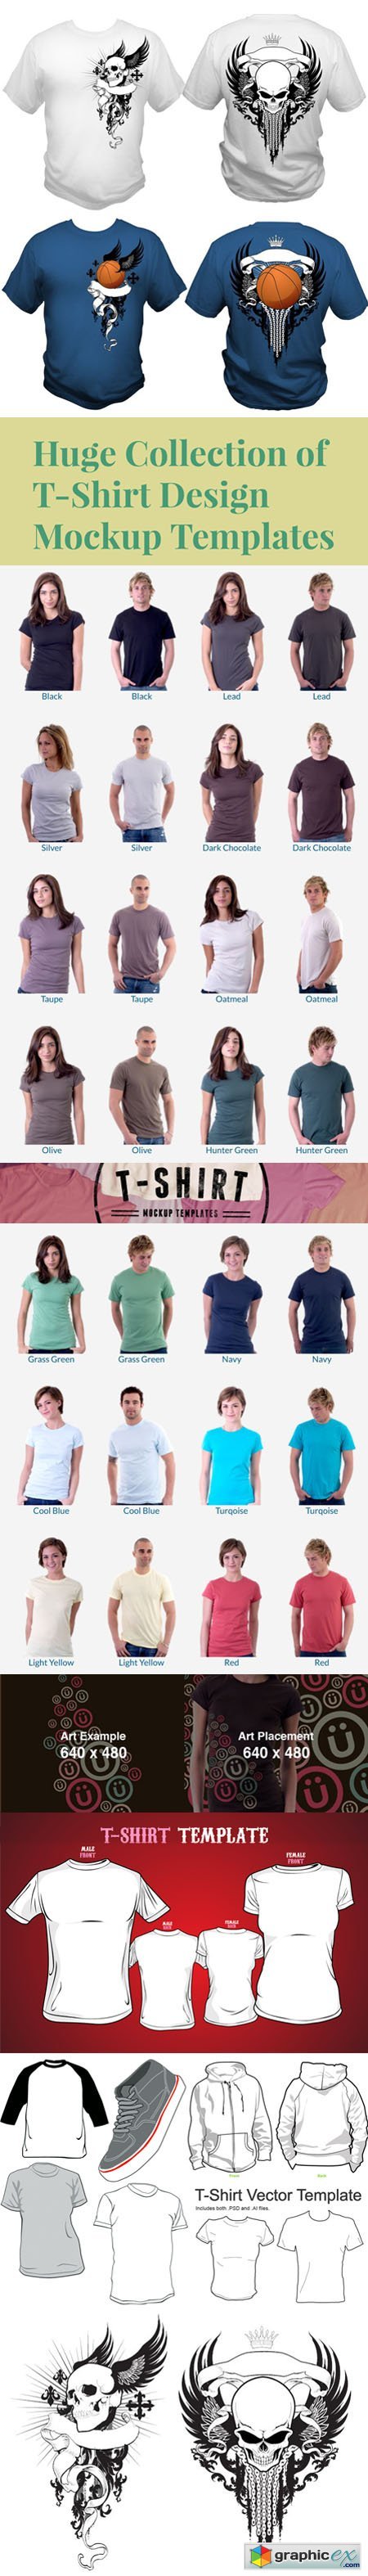 Huge Collection of T-Shirt Design Mockup Templates (PSD/AI/PNG)